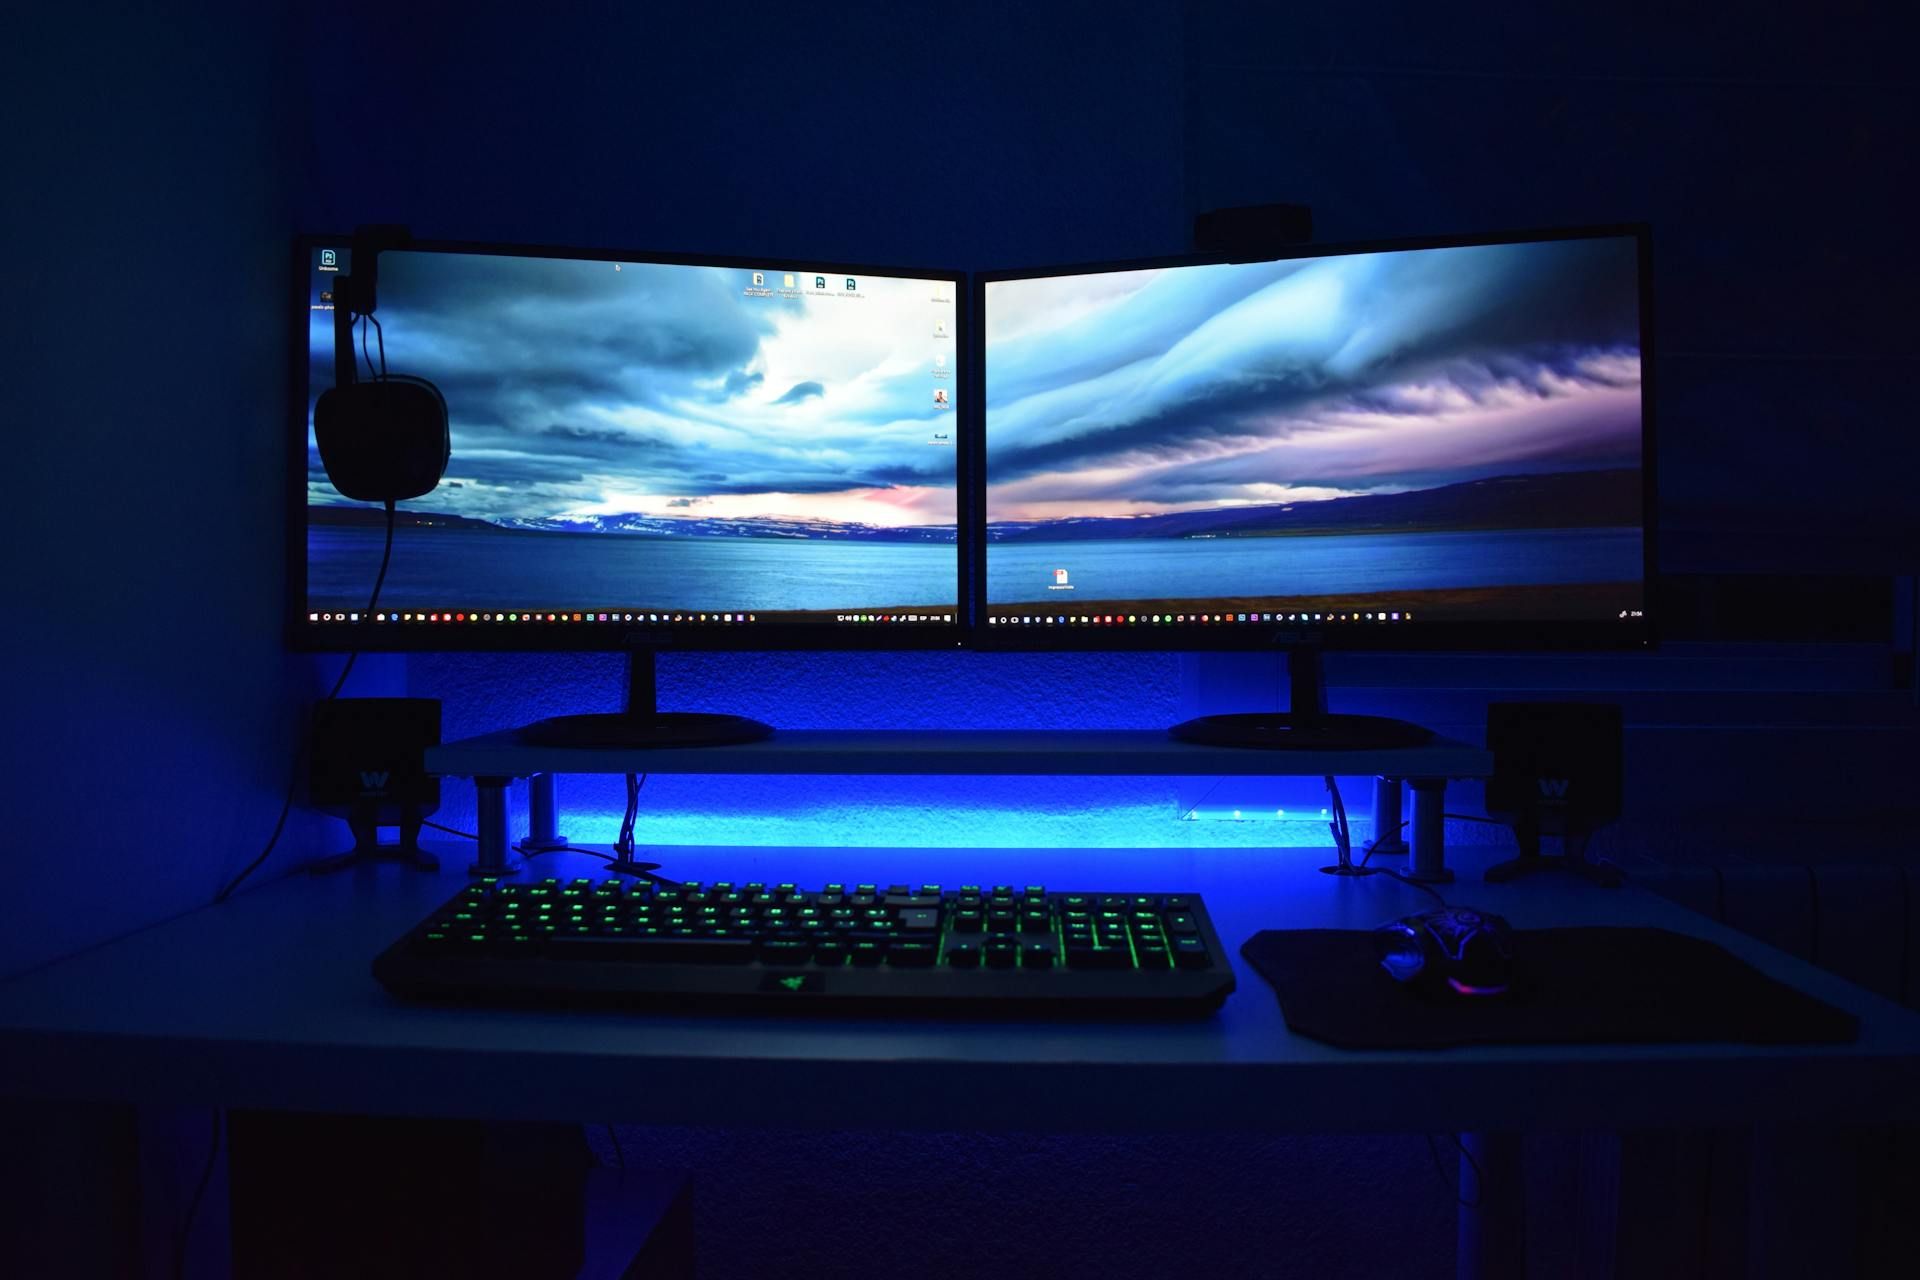 Dual monitor PC gaming setup